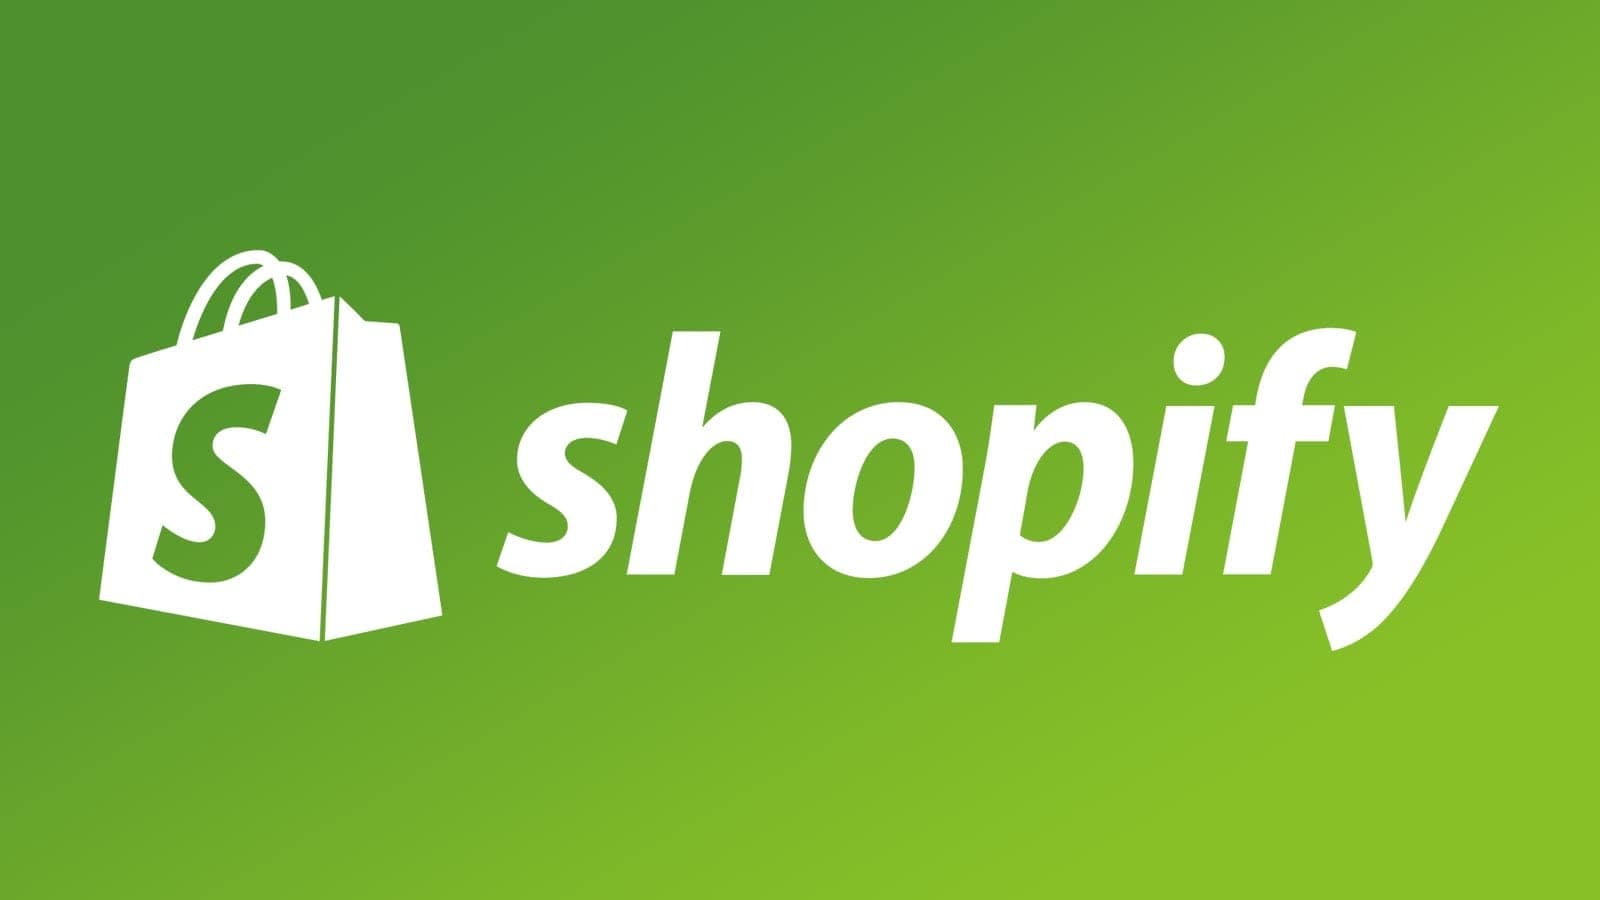 Oberlo (Shopify eCommerce Platform)